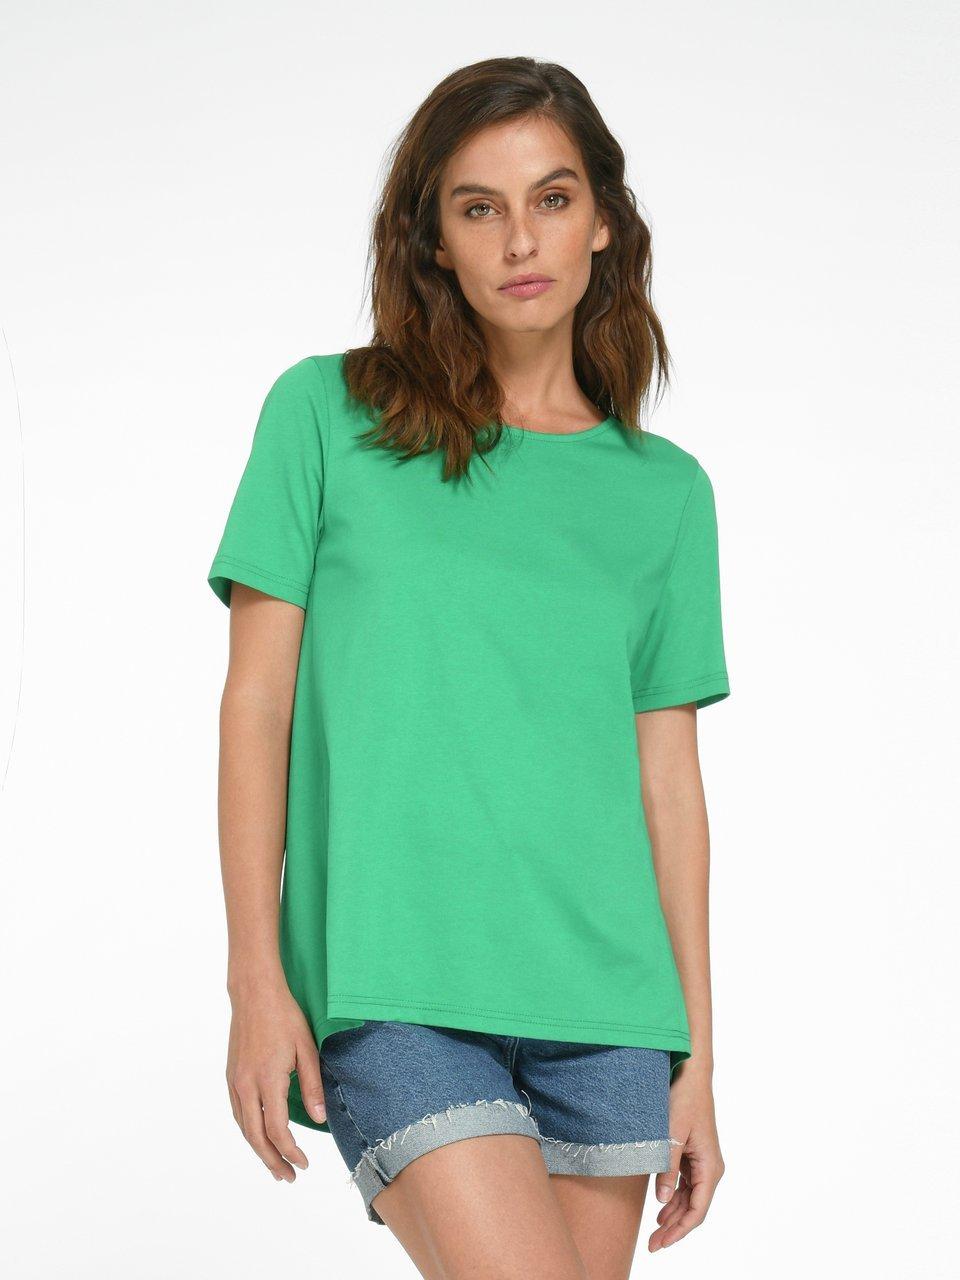 Green Cotton - Le T-shirt Benedikte 100% coton